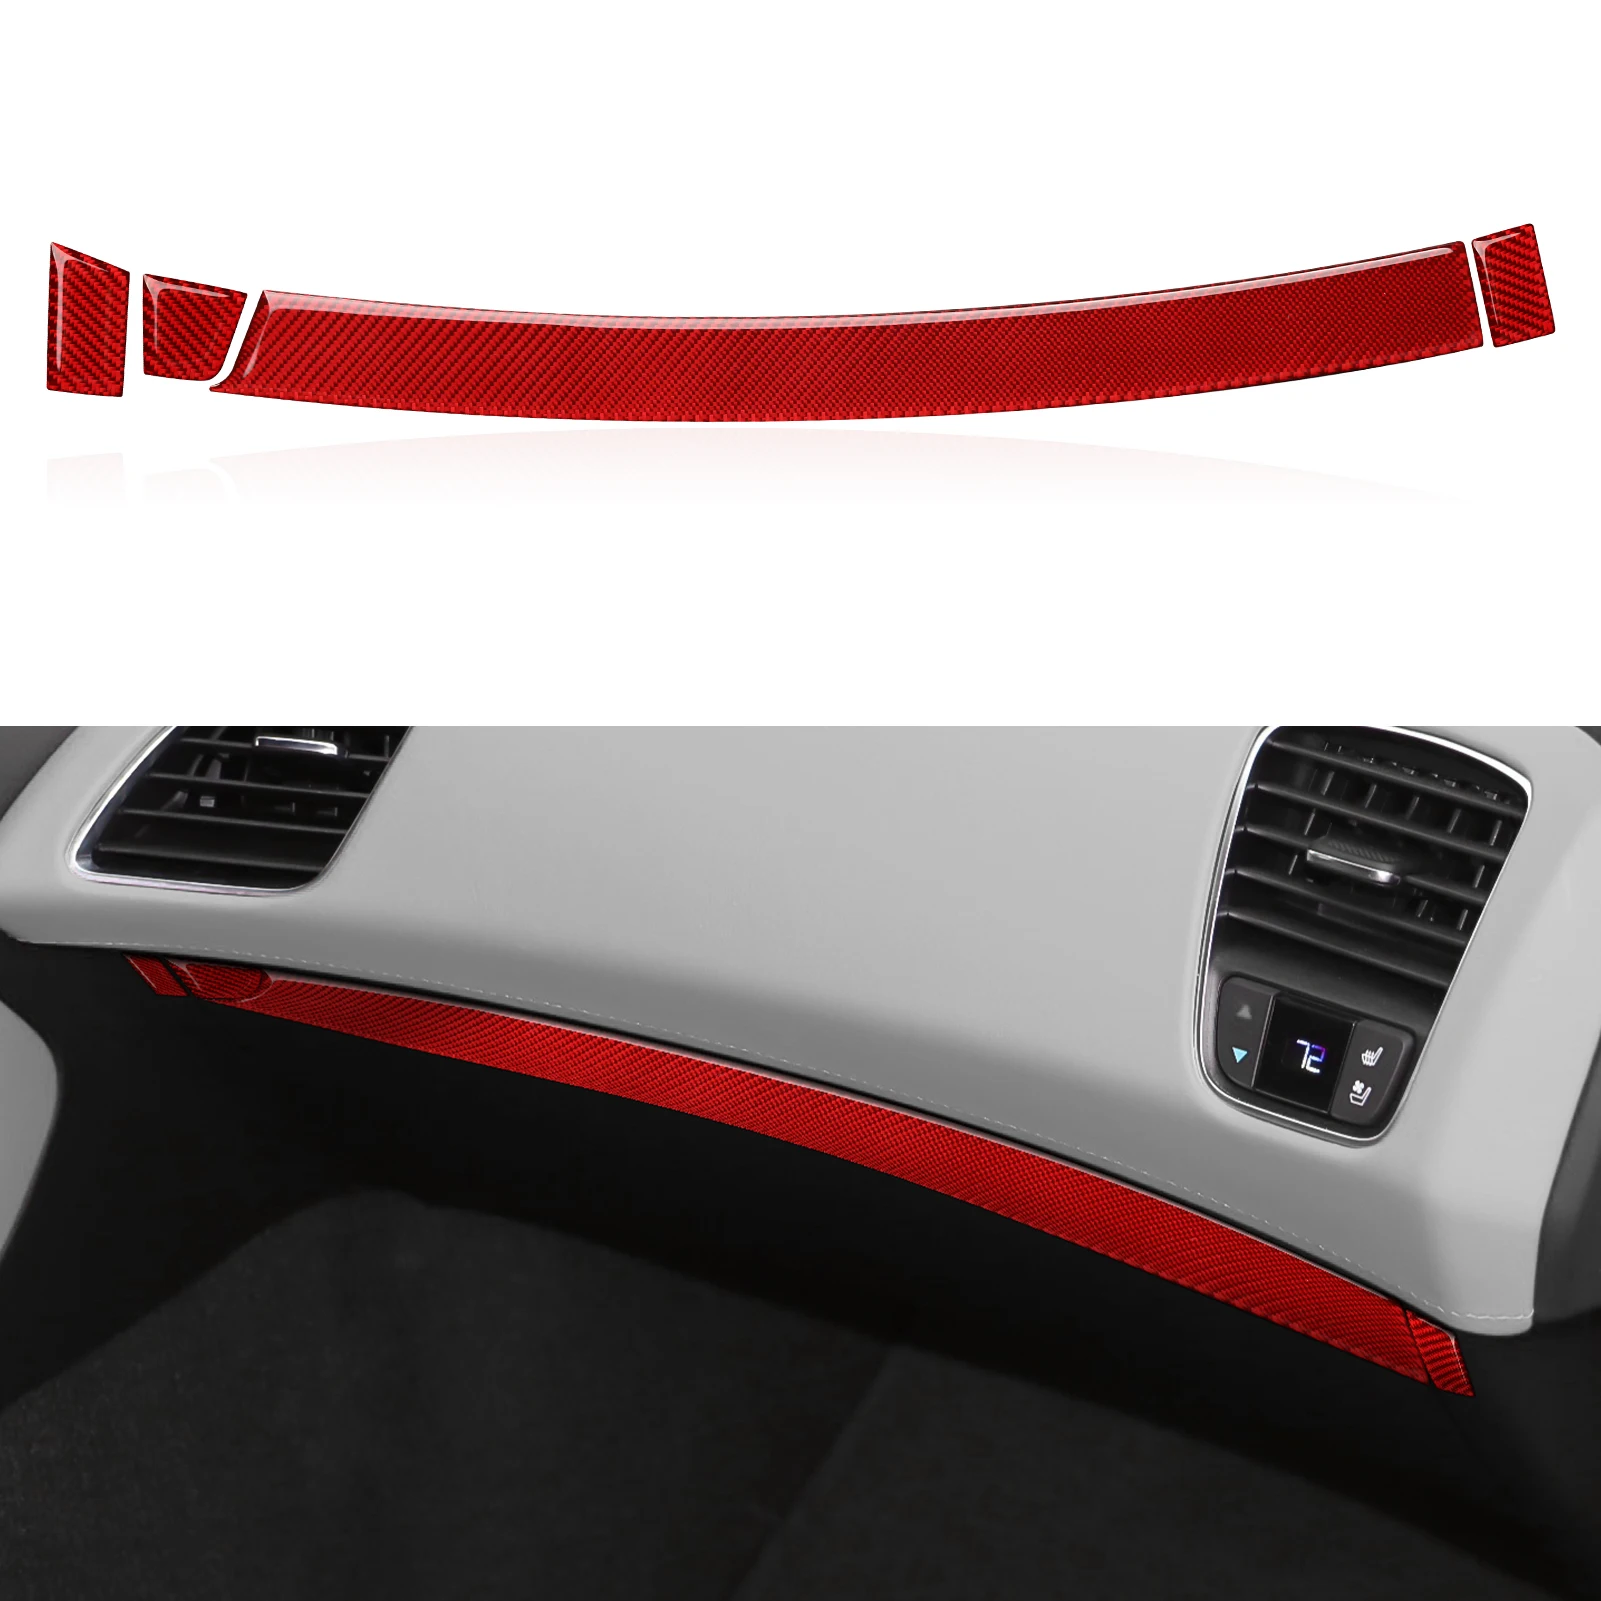 

Carbon Fiber Trim Car Co-Pilot Glove Box Trim Strip Sticker Decal Cover for Chevrolet Corvette C7 2014 -2019 Accessories